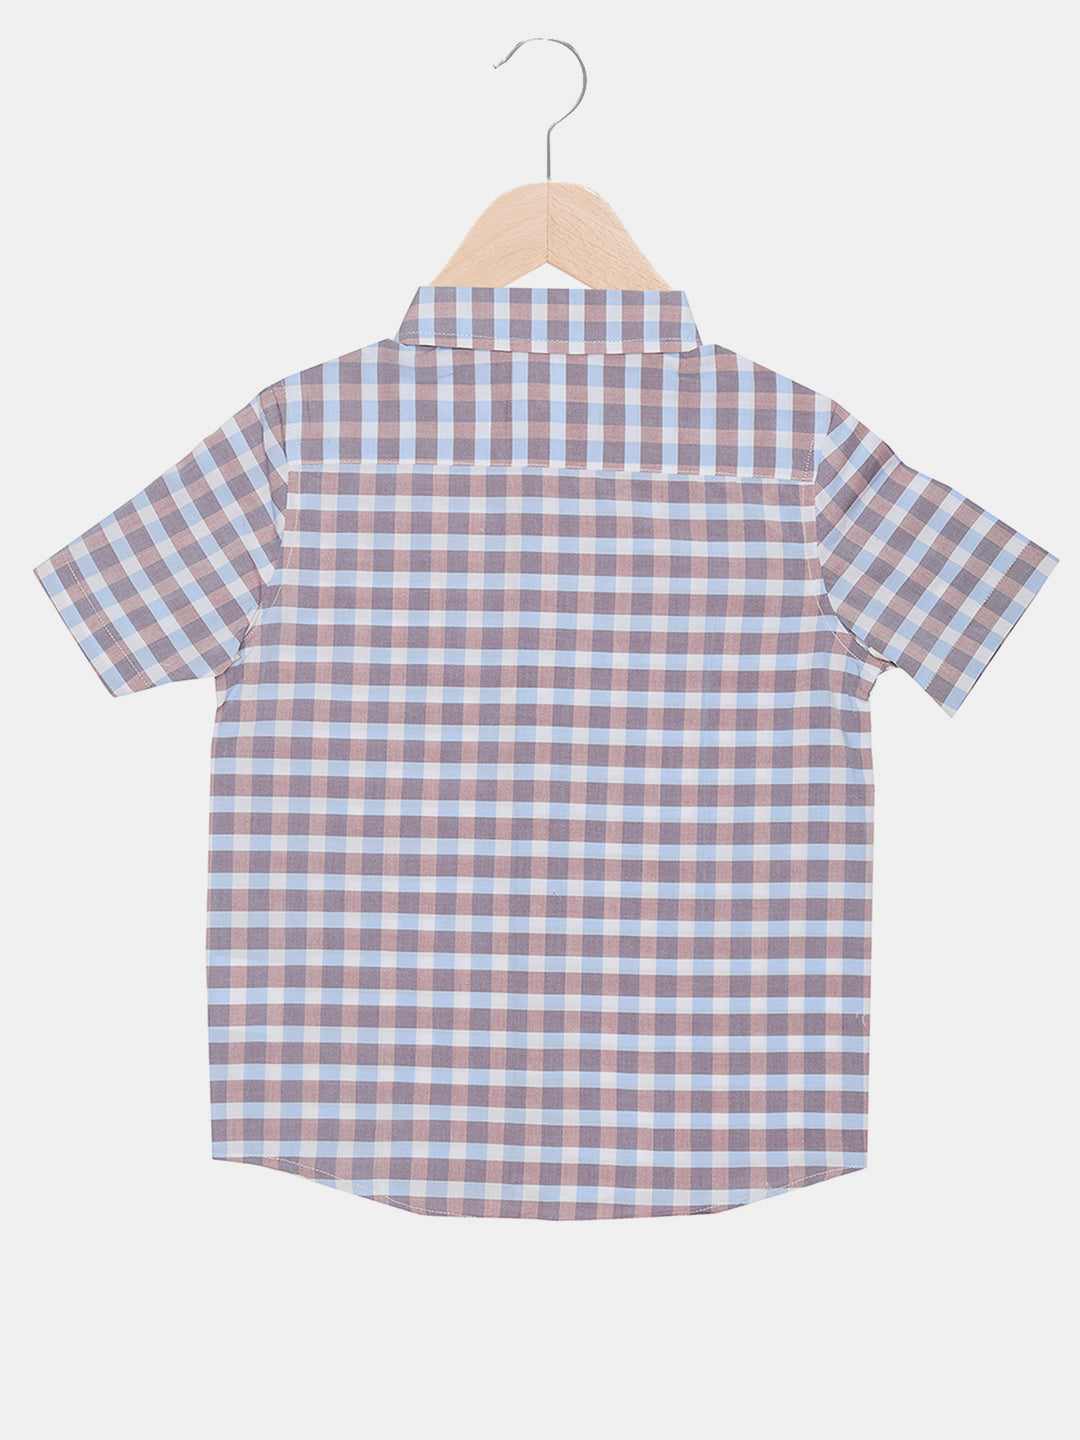 Blue & Brown Check Shirt